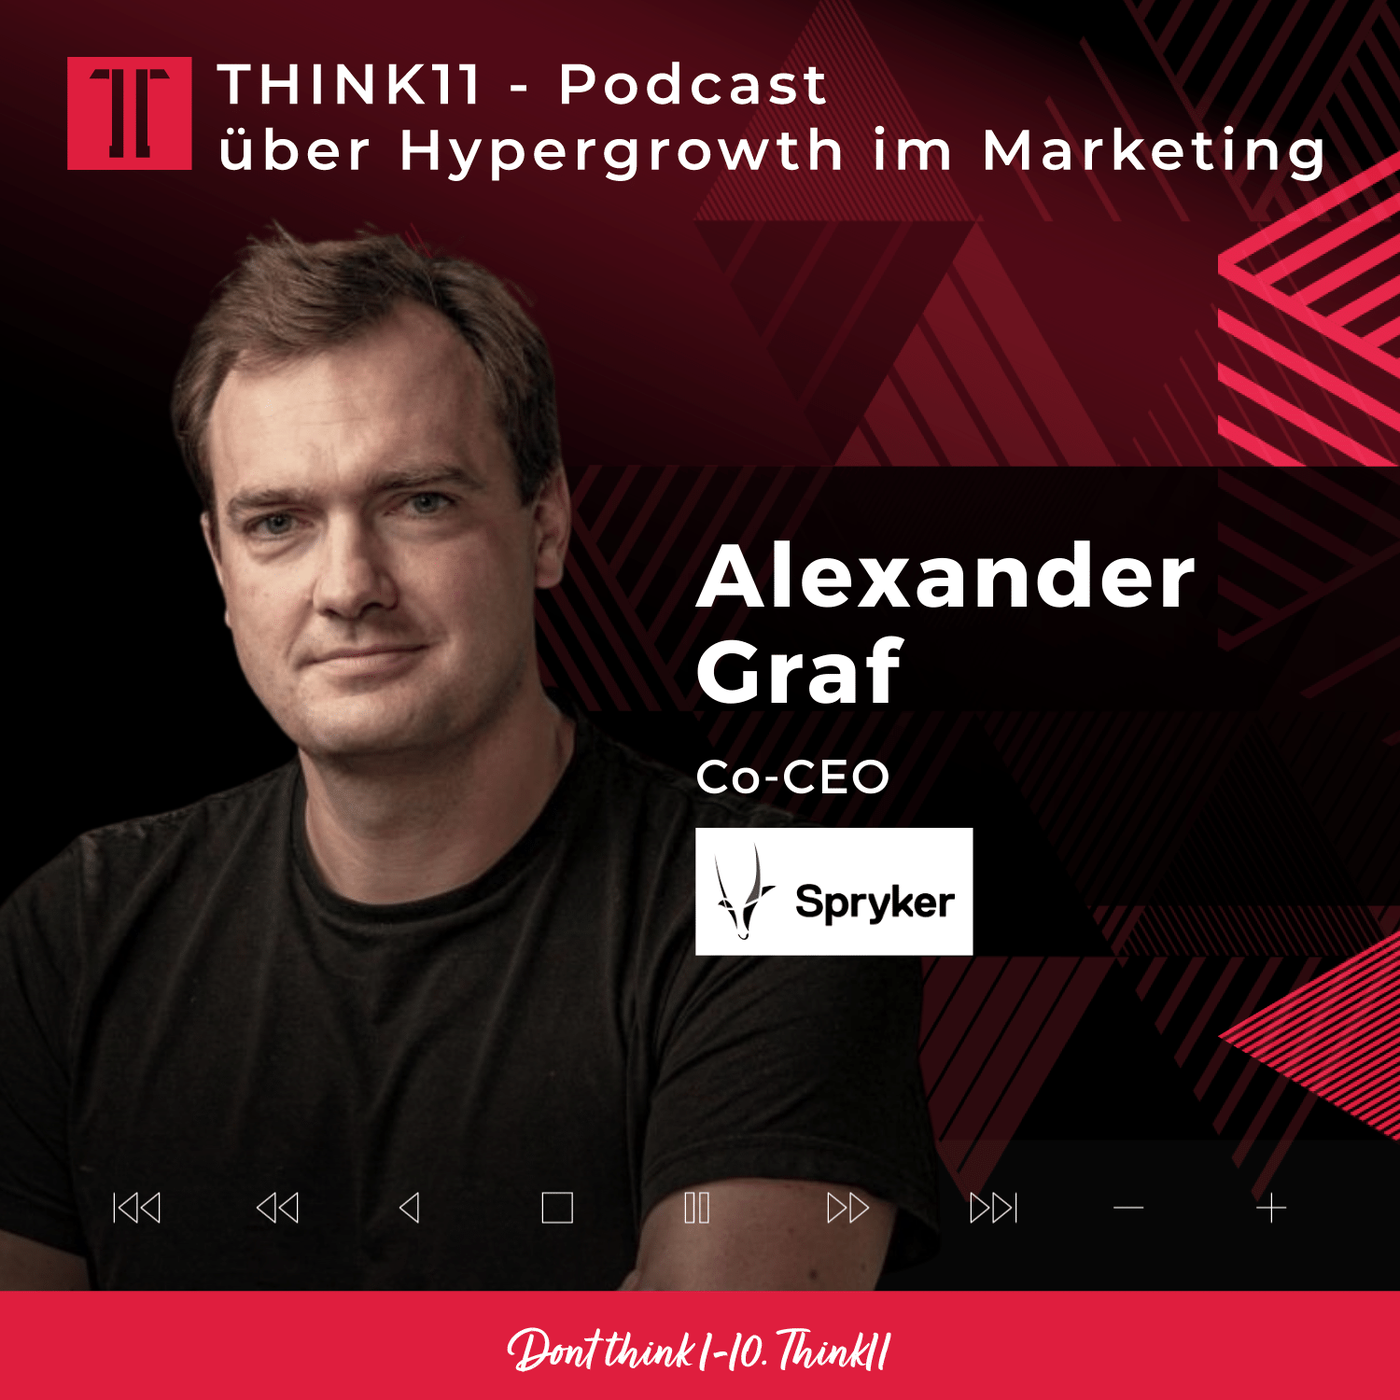 Think11-Talk mit Alexander Graf, Co-CEO Spryker Systems